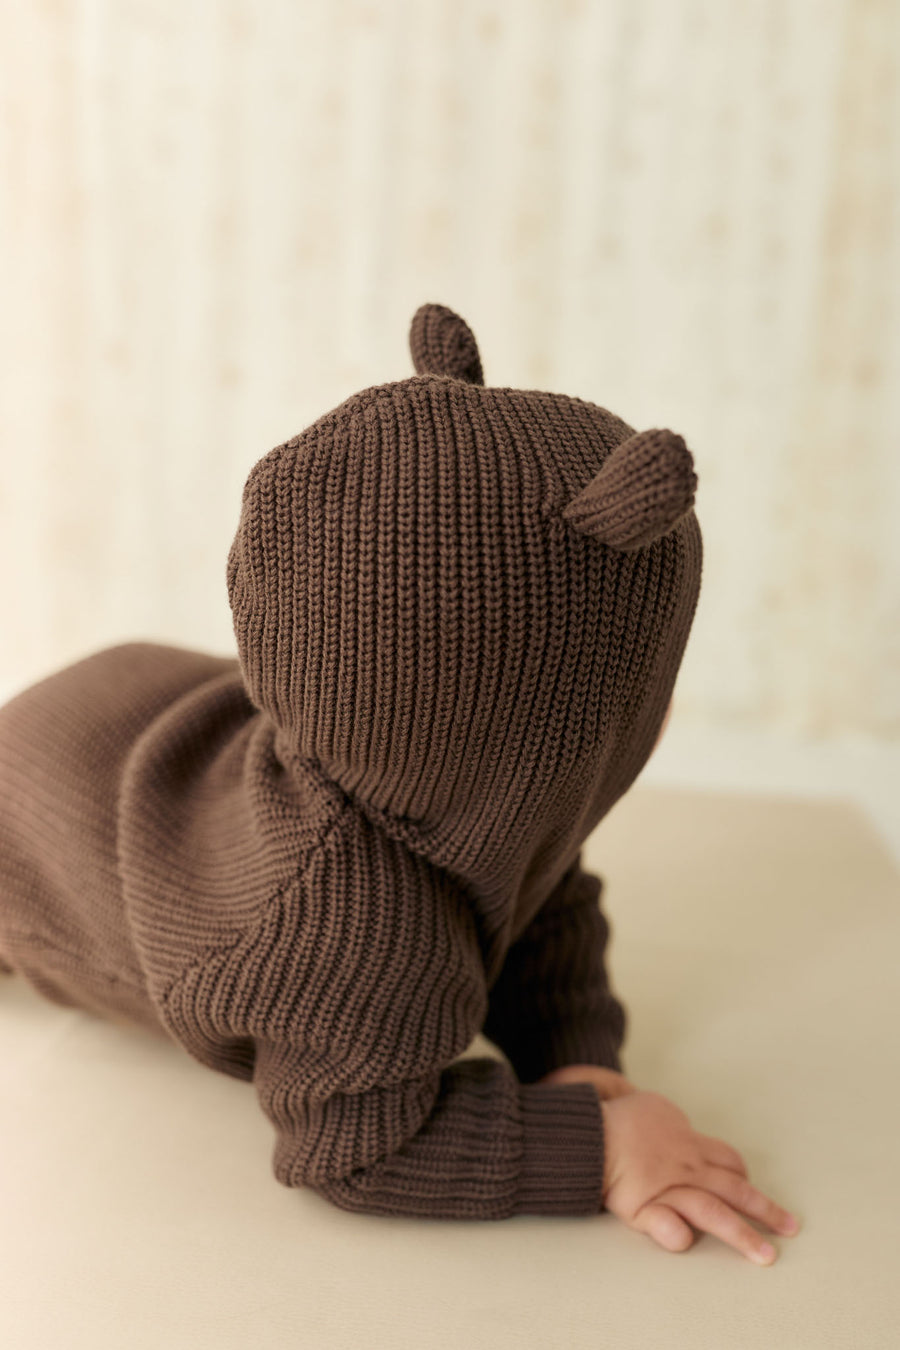 OG Bear Knit Onepiece - Dark Coffee Childrens Onepiece from Jamie Kay NZ